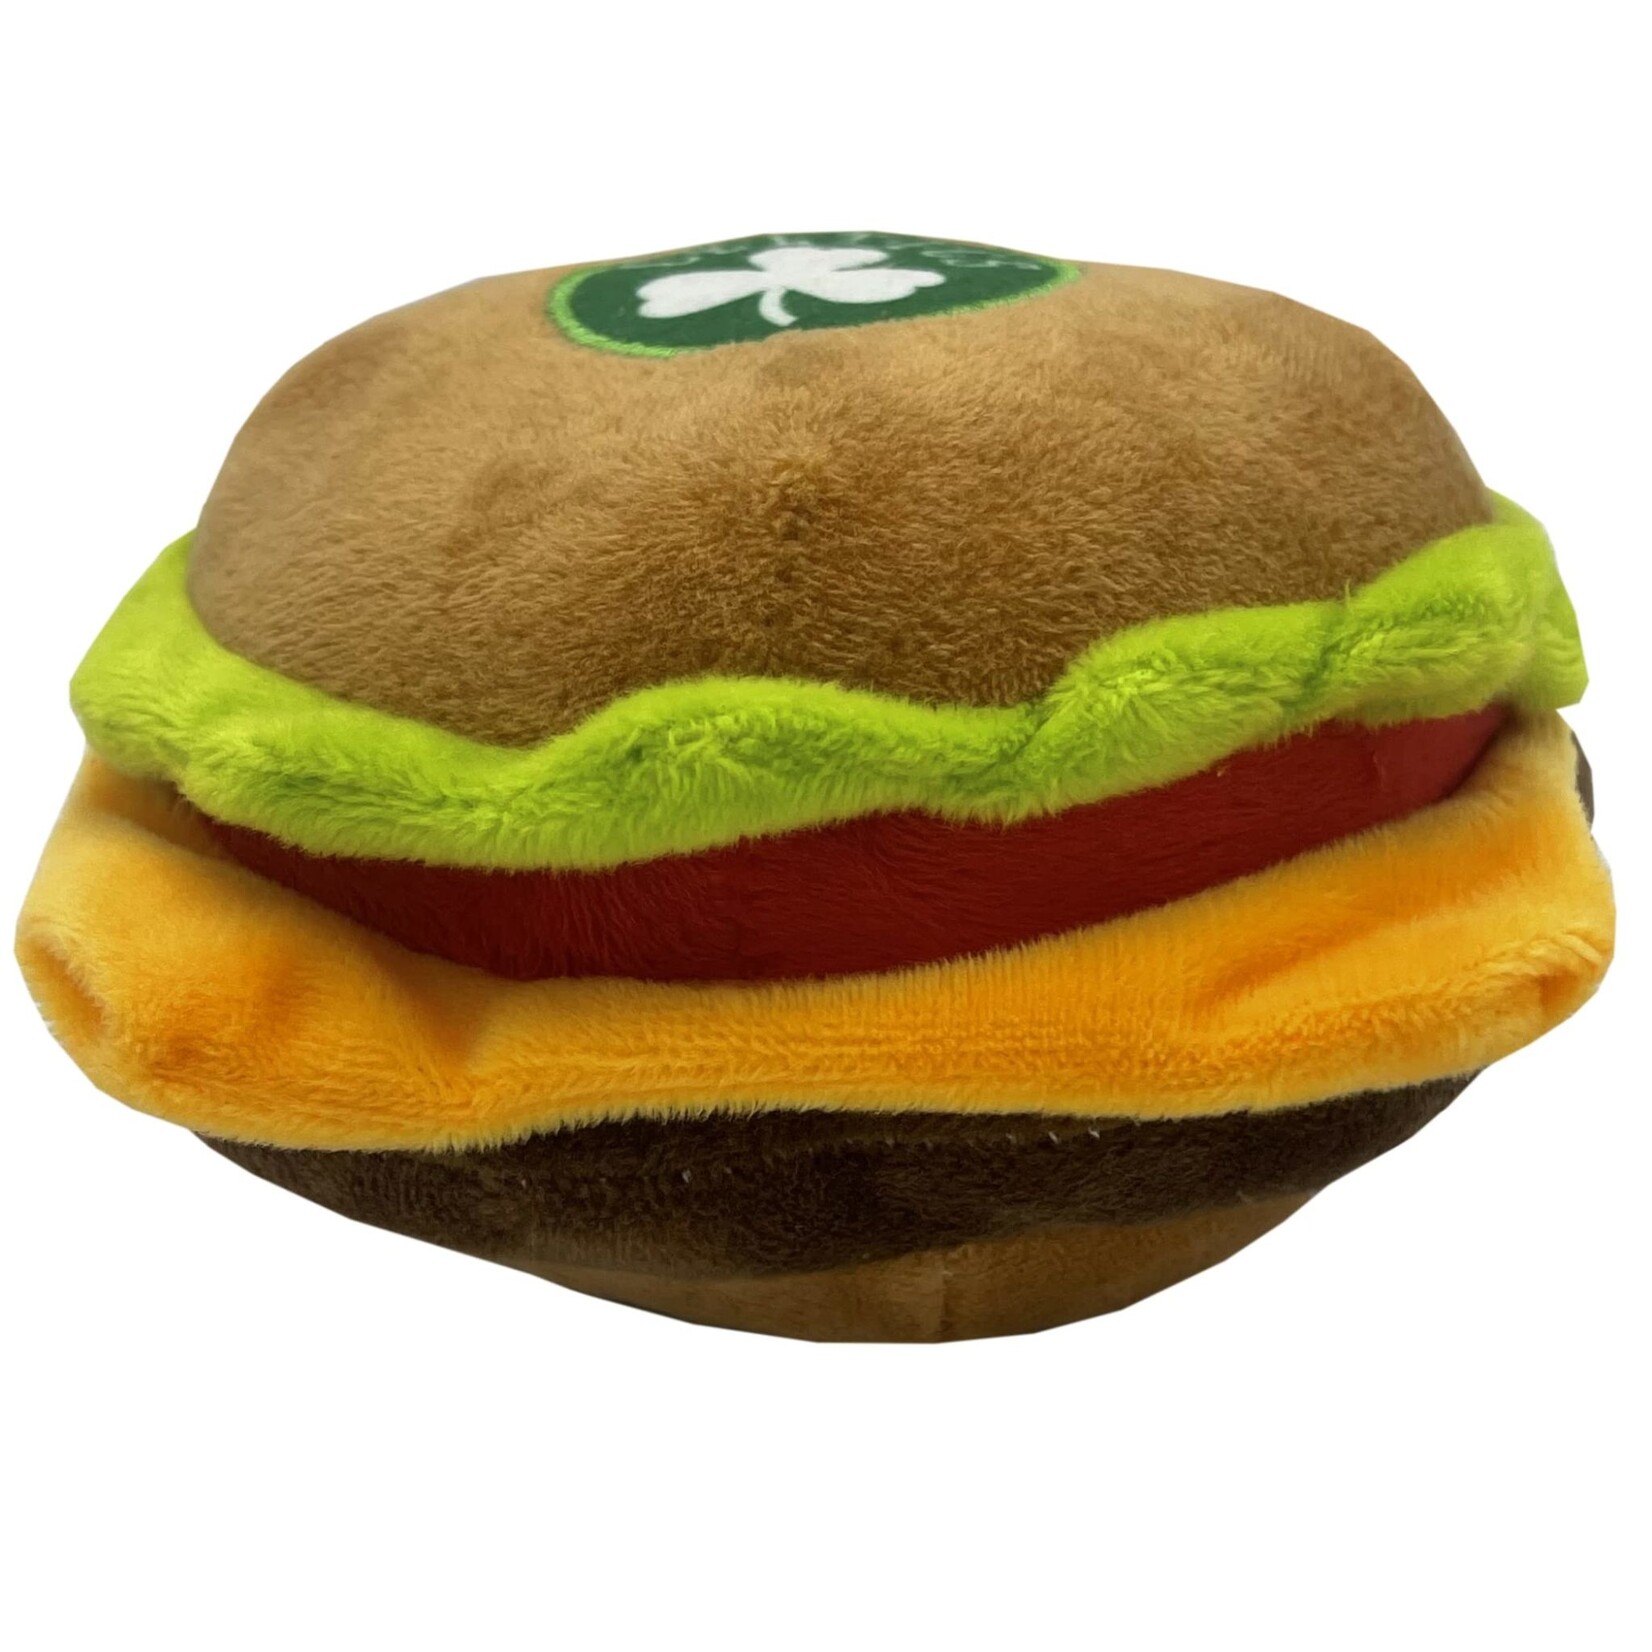 Pet First Boston Celtics Hamburger Toy